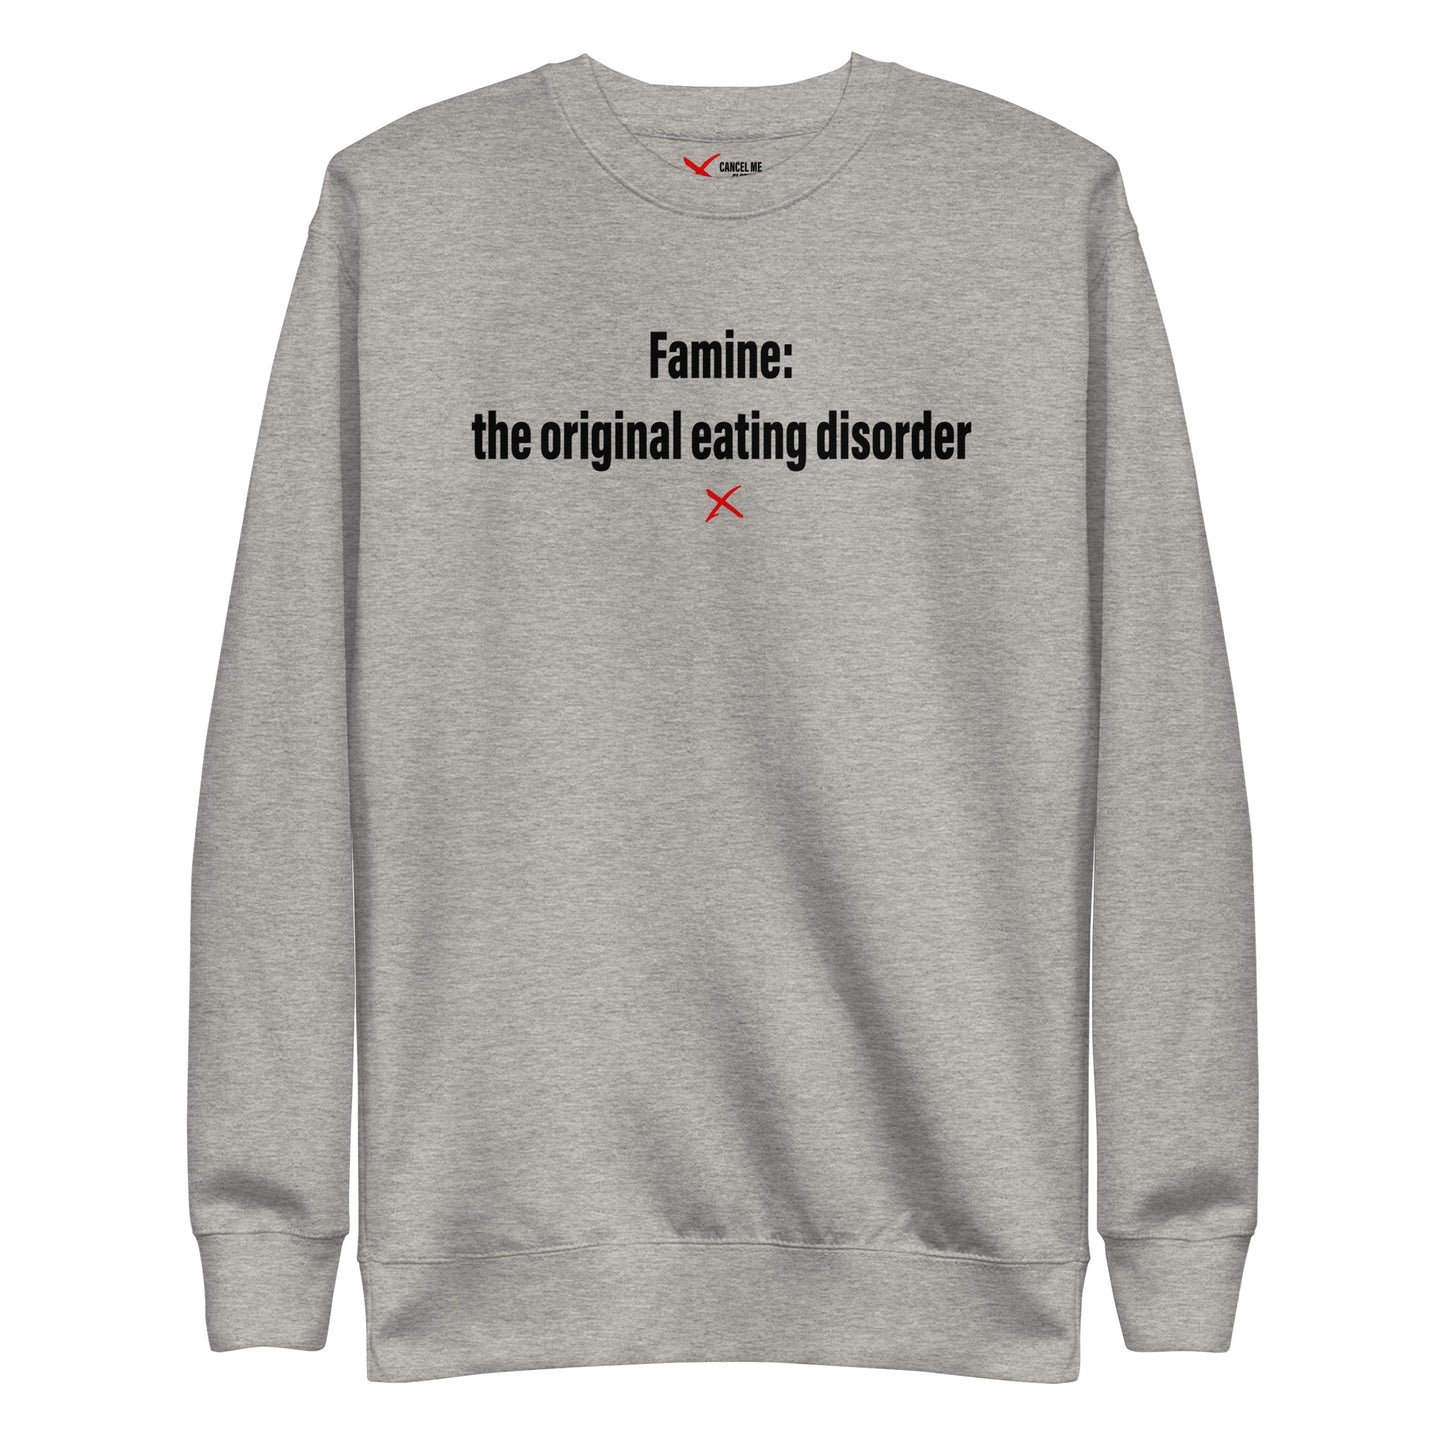 Famine: the original eating disorder - Sweatshirt